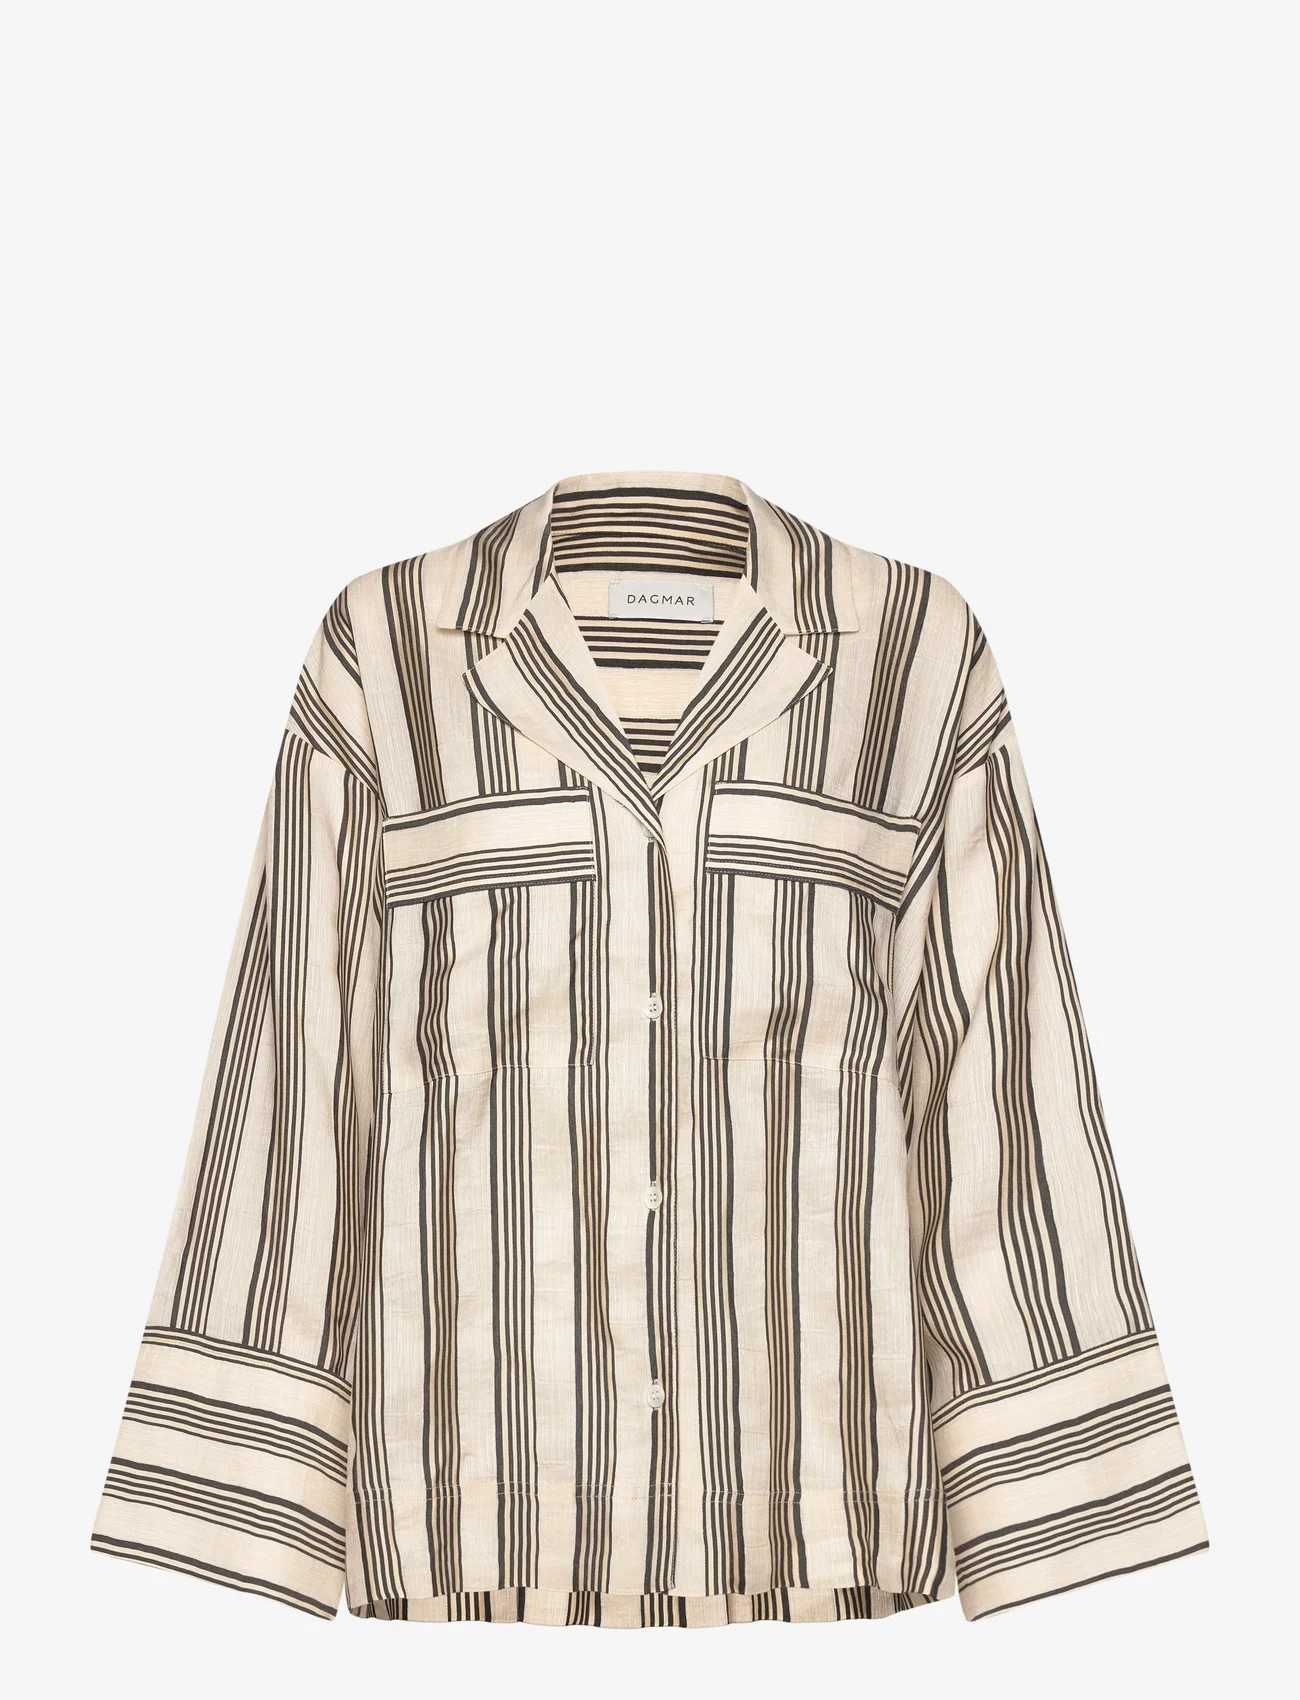 House Of Dagmar - Striped pyjama shirt - topi - ivory/black - 0